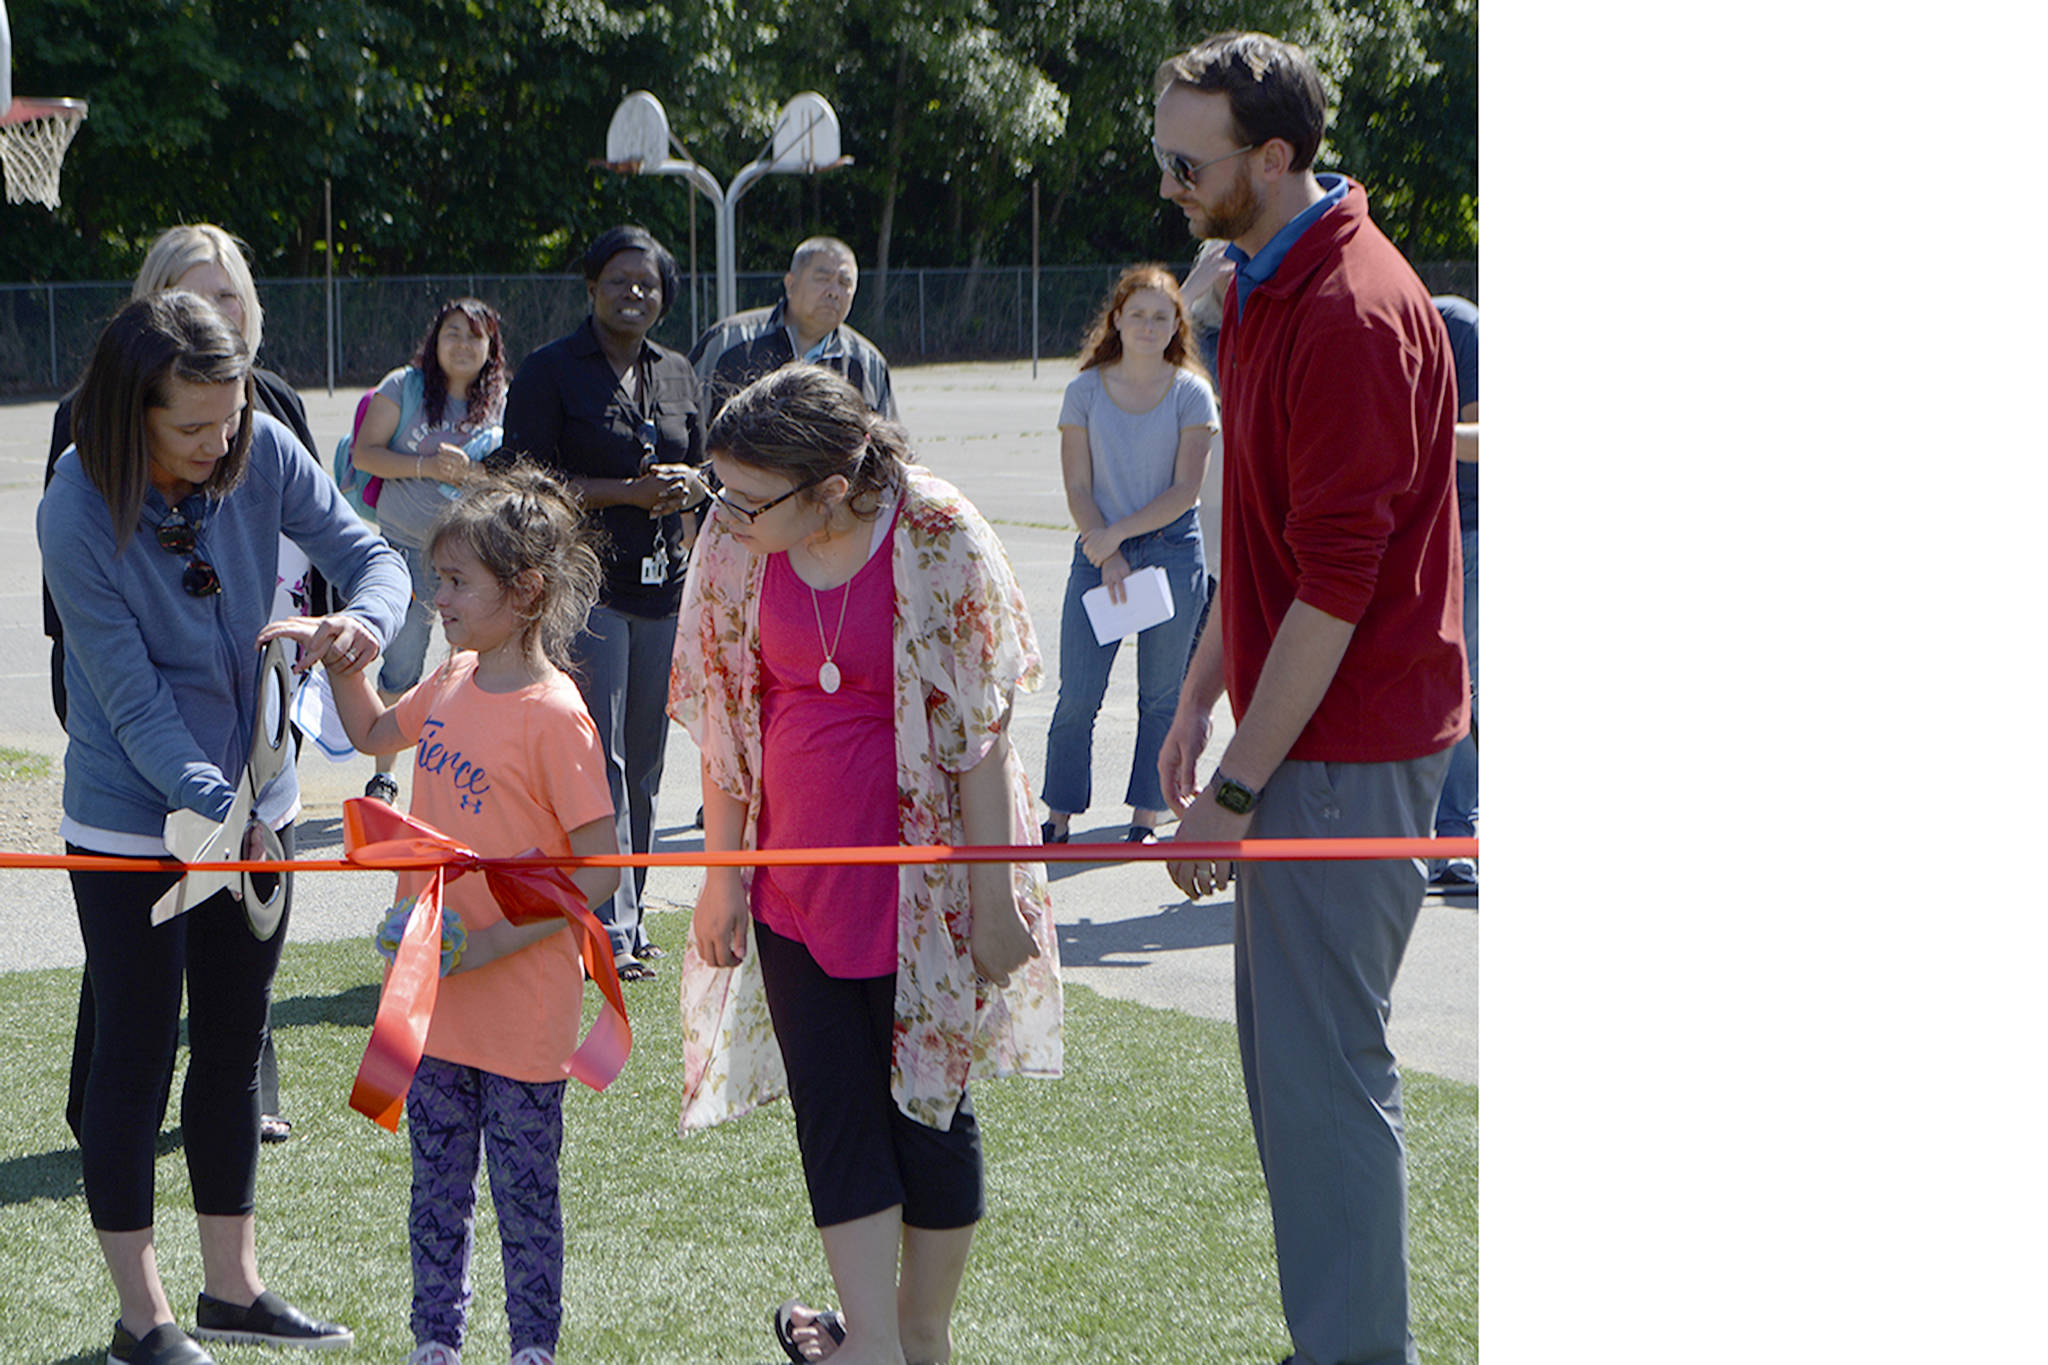 Leah’s Foundation donates playground to Marysville district at Kellogg-Marsh Elementary School (slide show)